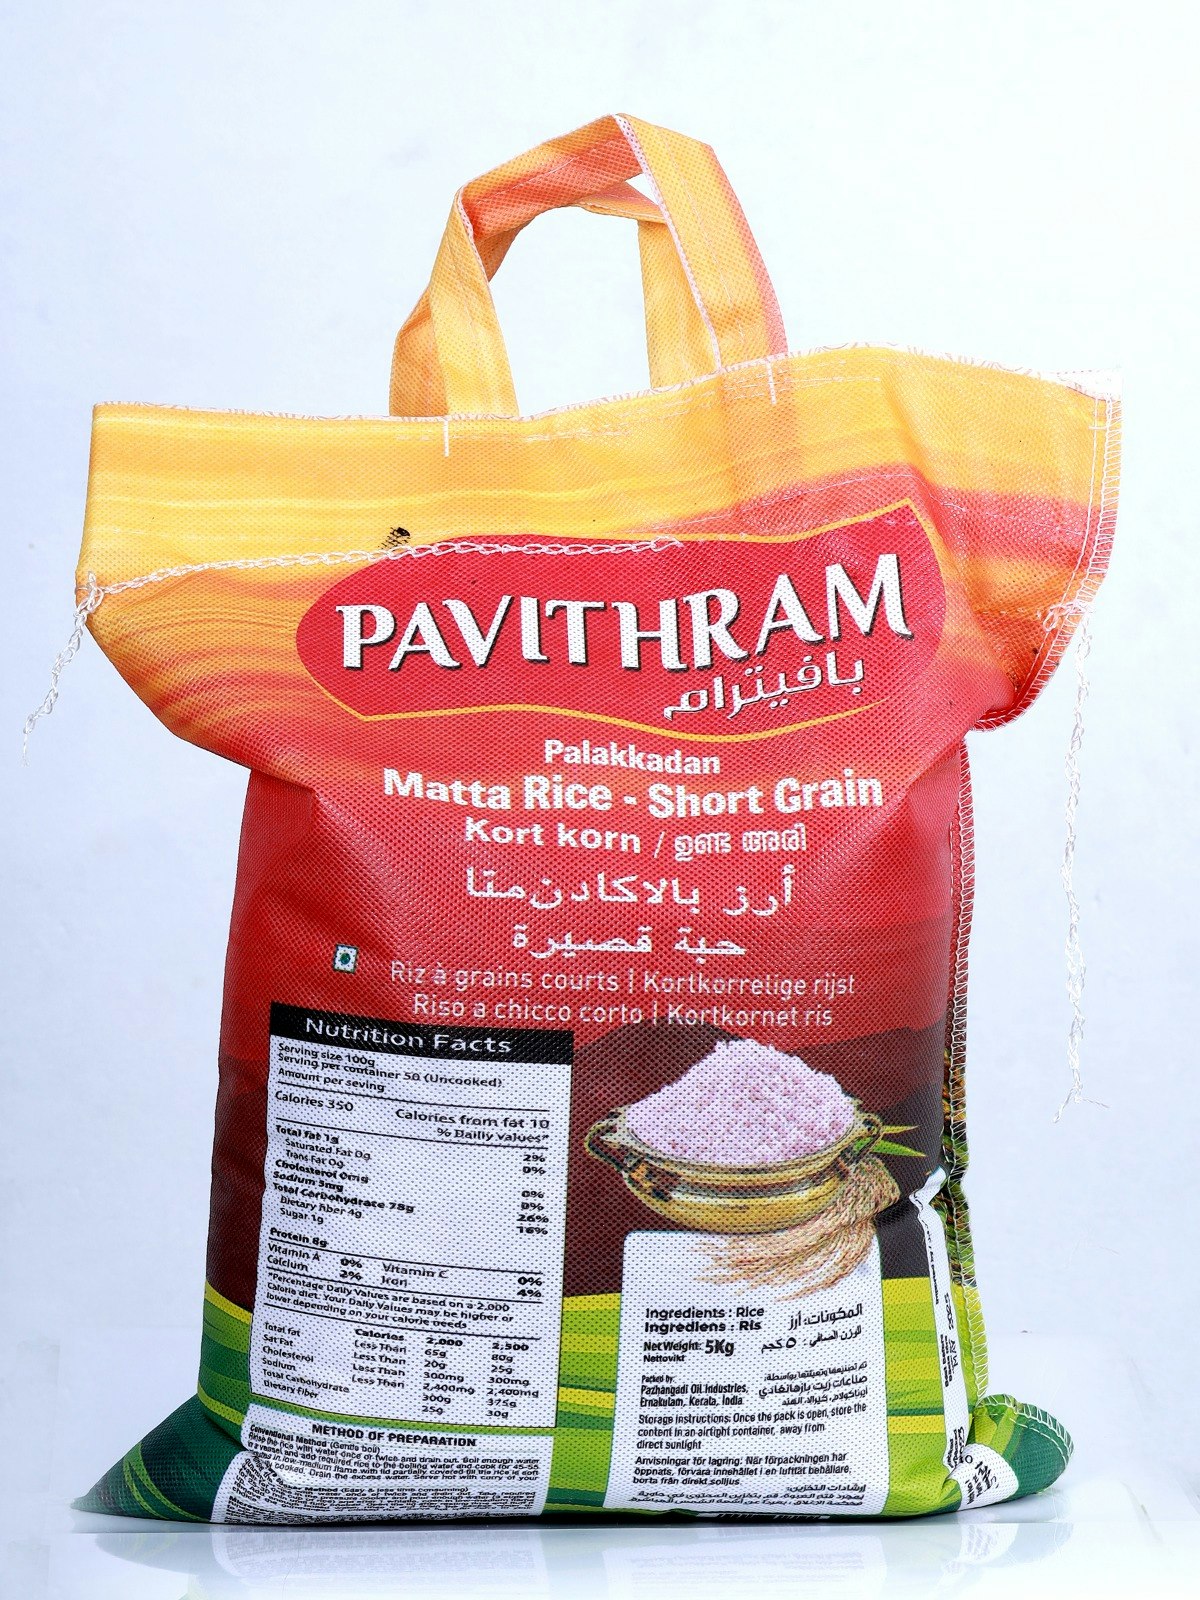 Palakkadan Matta Rice (Short Grain) (Pavithram) 5Kg